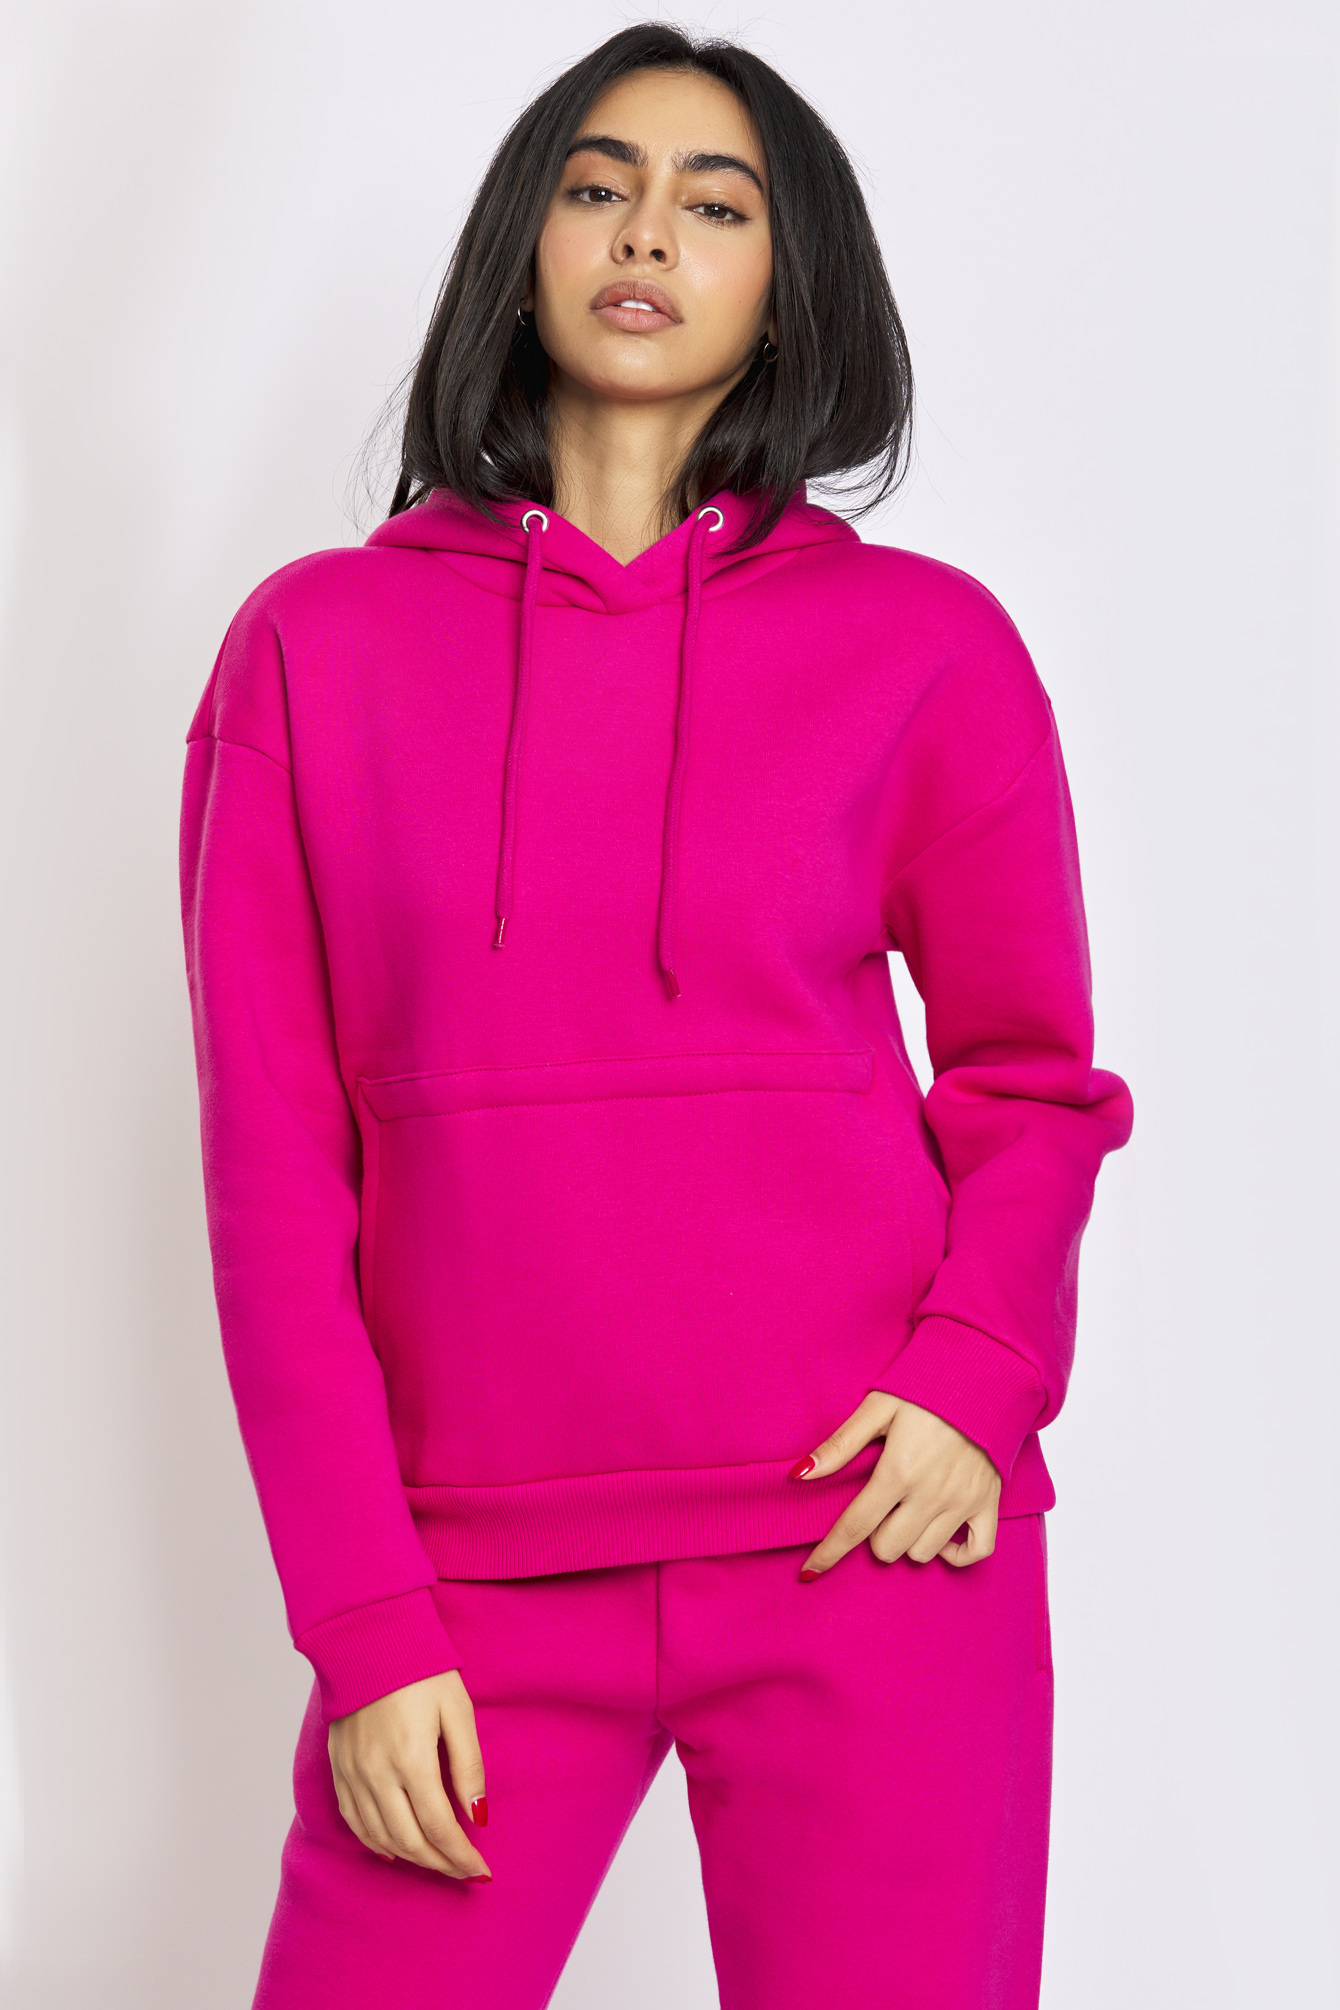 lockerer-hoodie-in-pink-FL23019-a